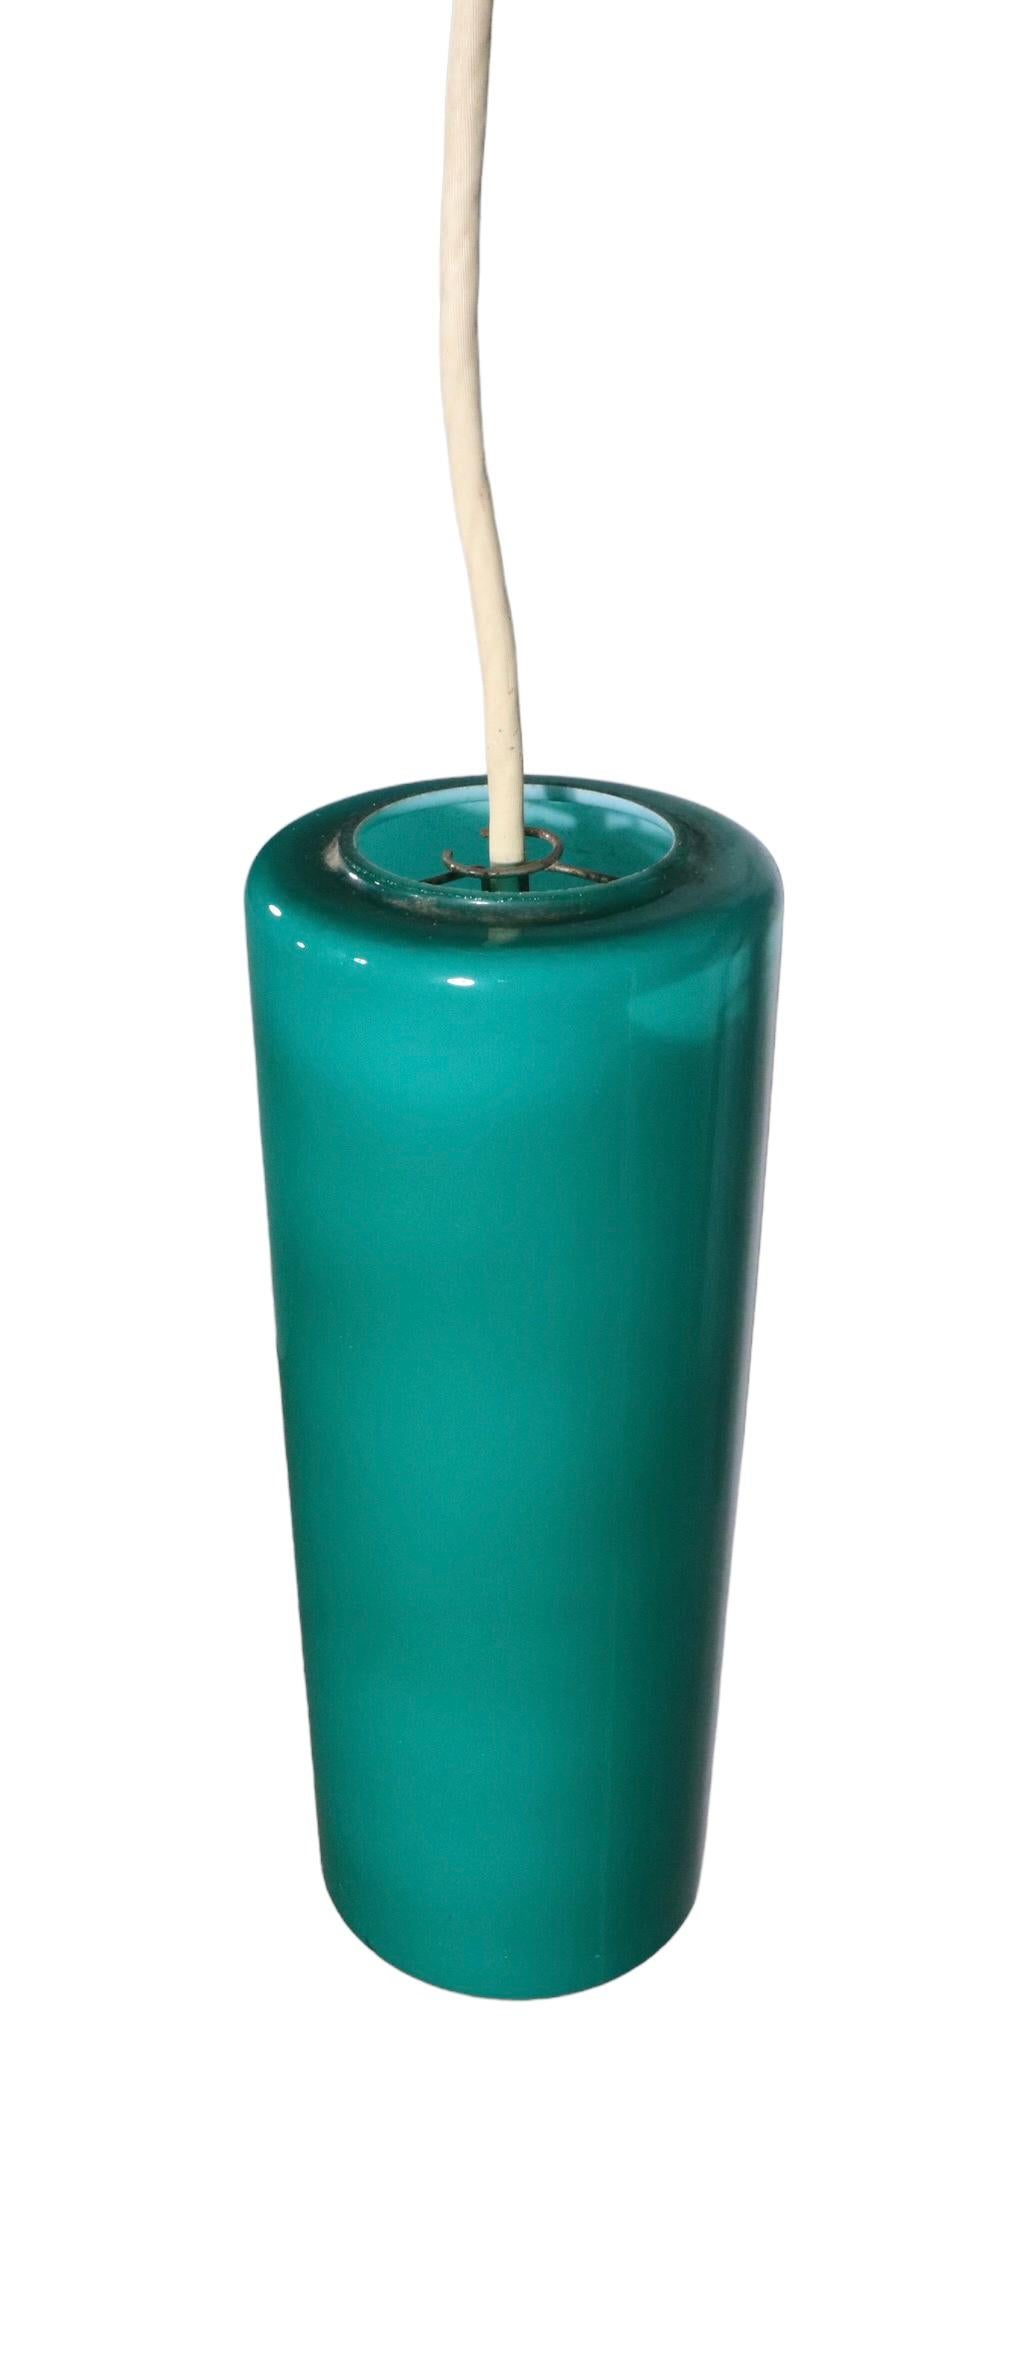 Prescolit-Zylinder-Kronleuchter aus grünem Glas, ca. 1950 - 1970er Jahre im Angebot 2